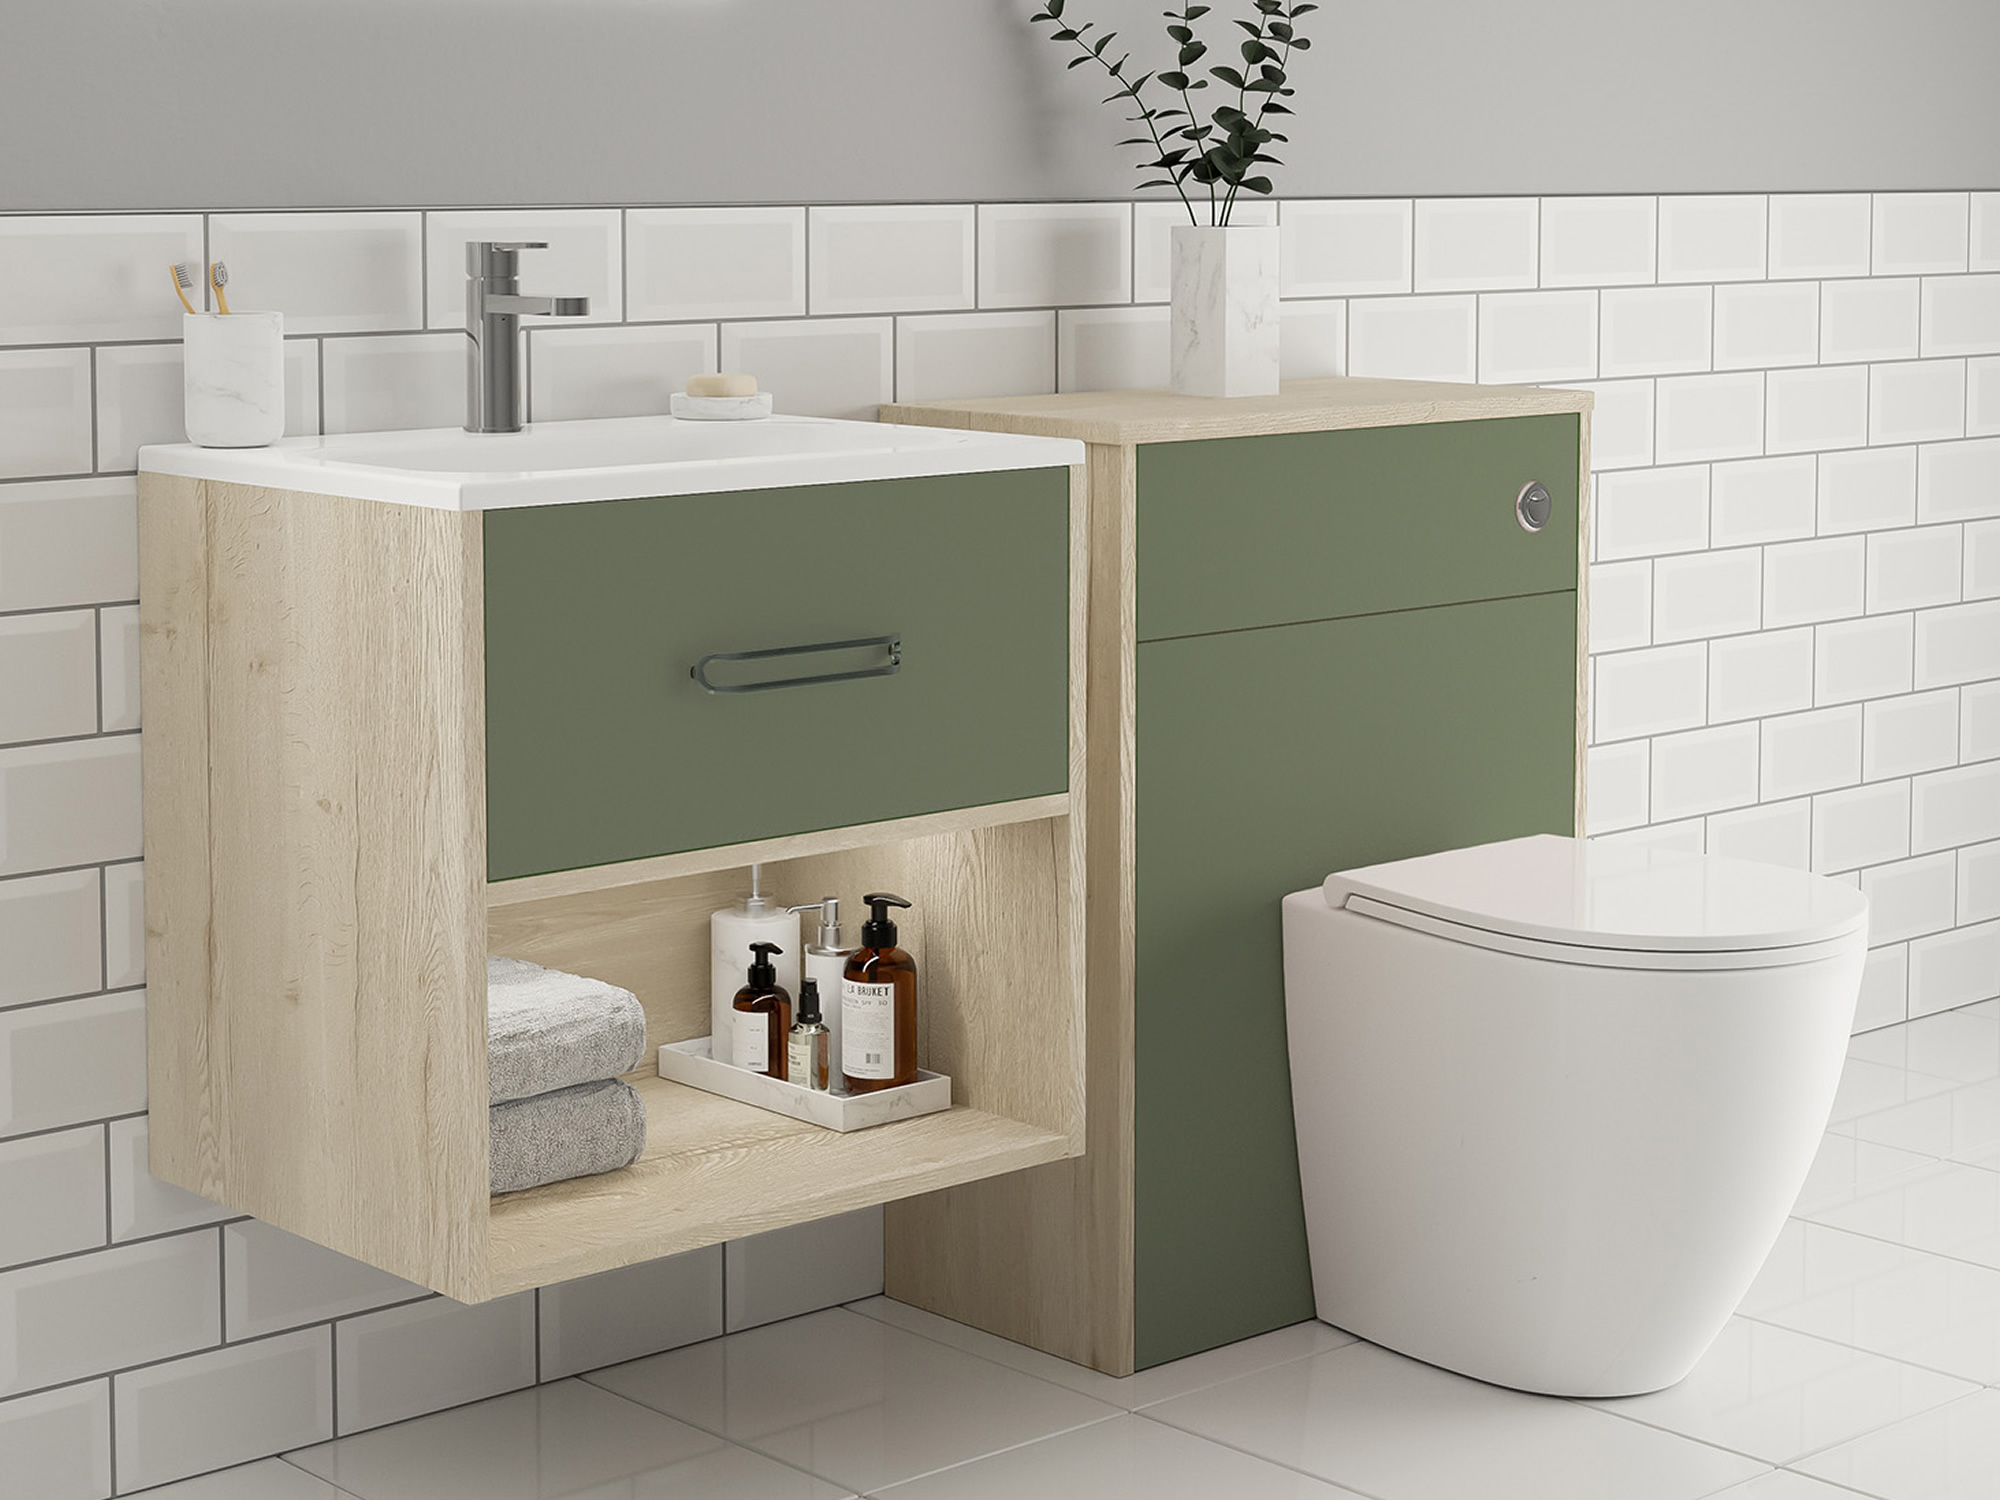 Design Apri Reed Green Bathroom